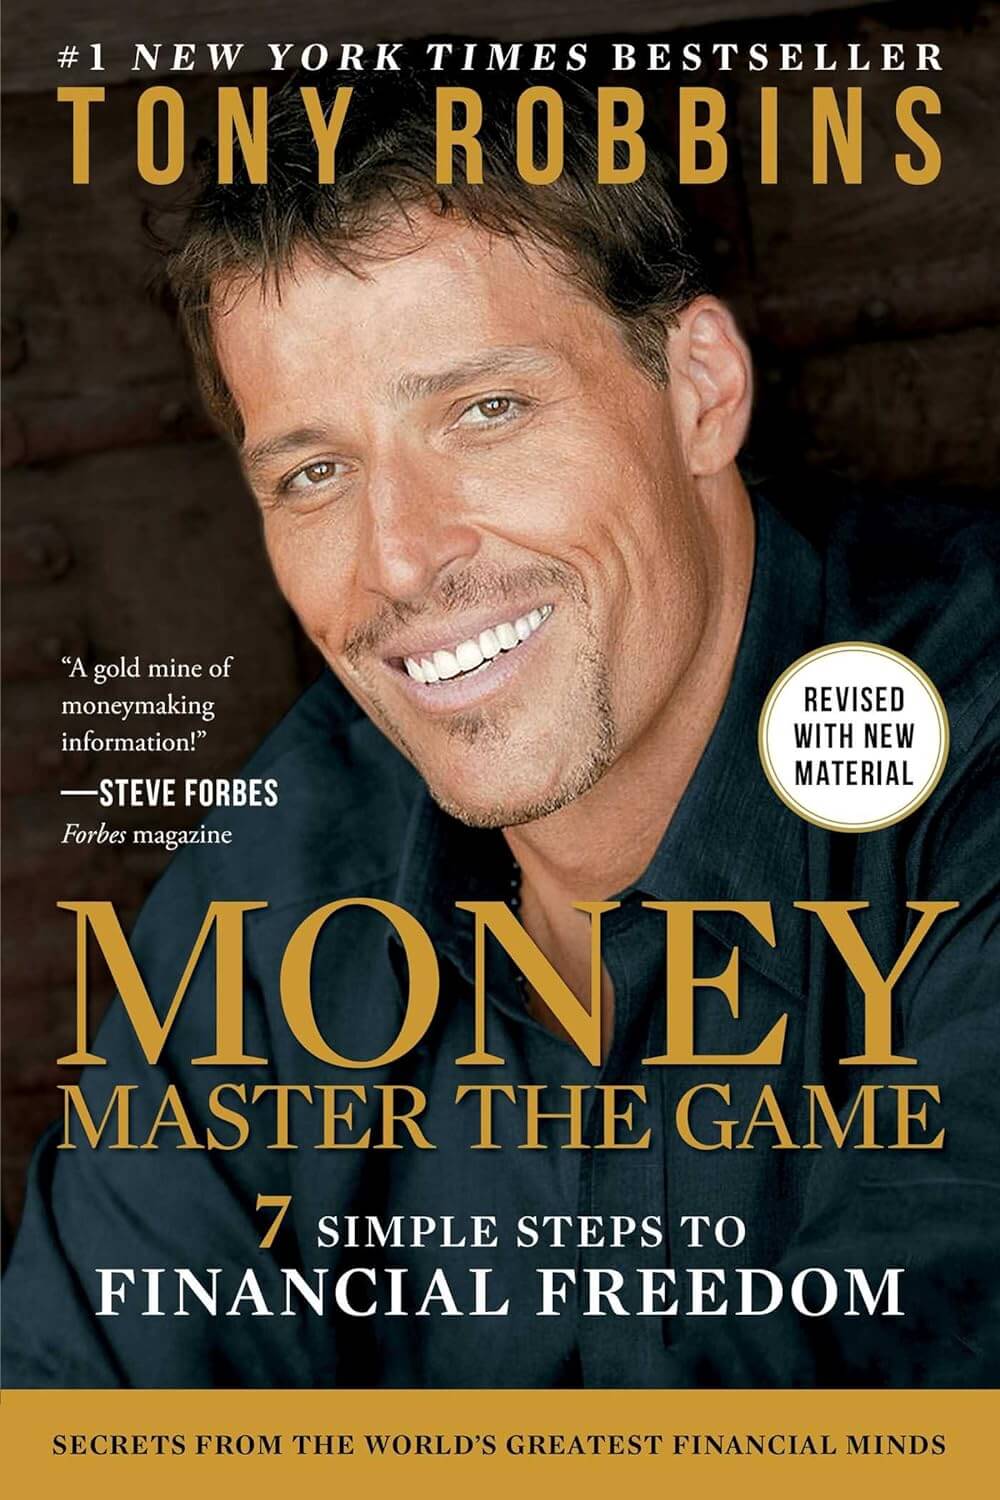 7. Tony Robbins - 'Money Master the Game' 💸